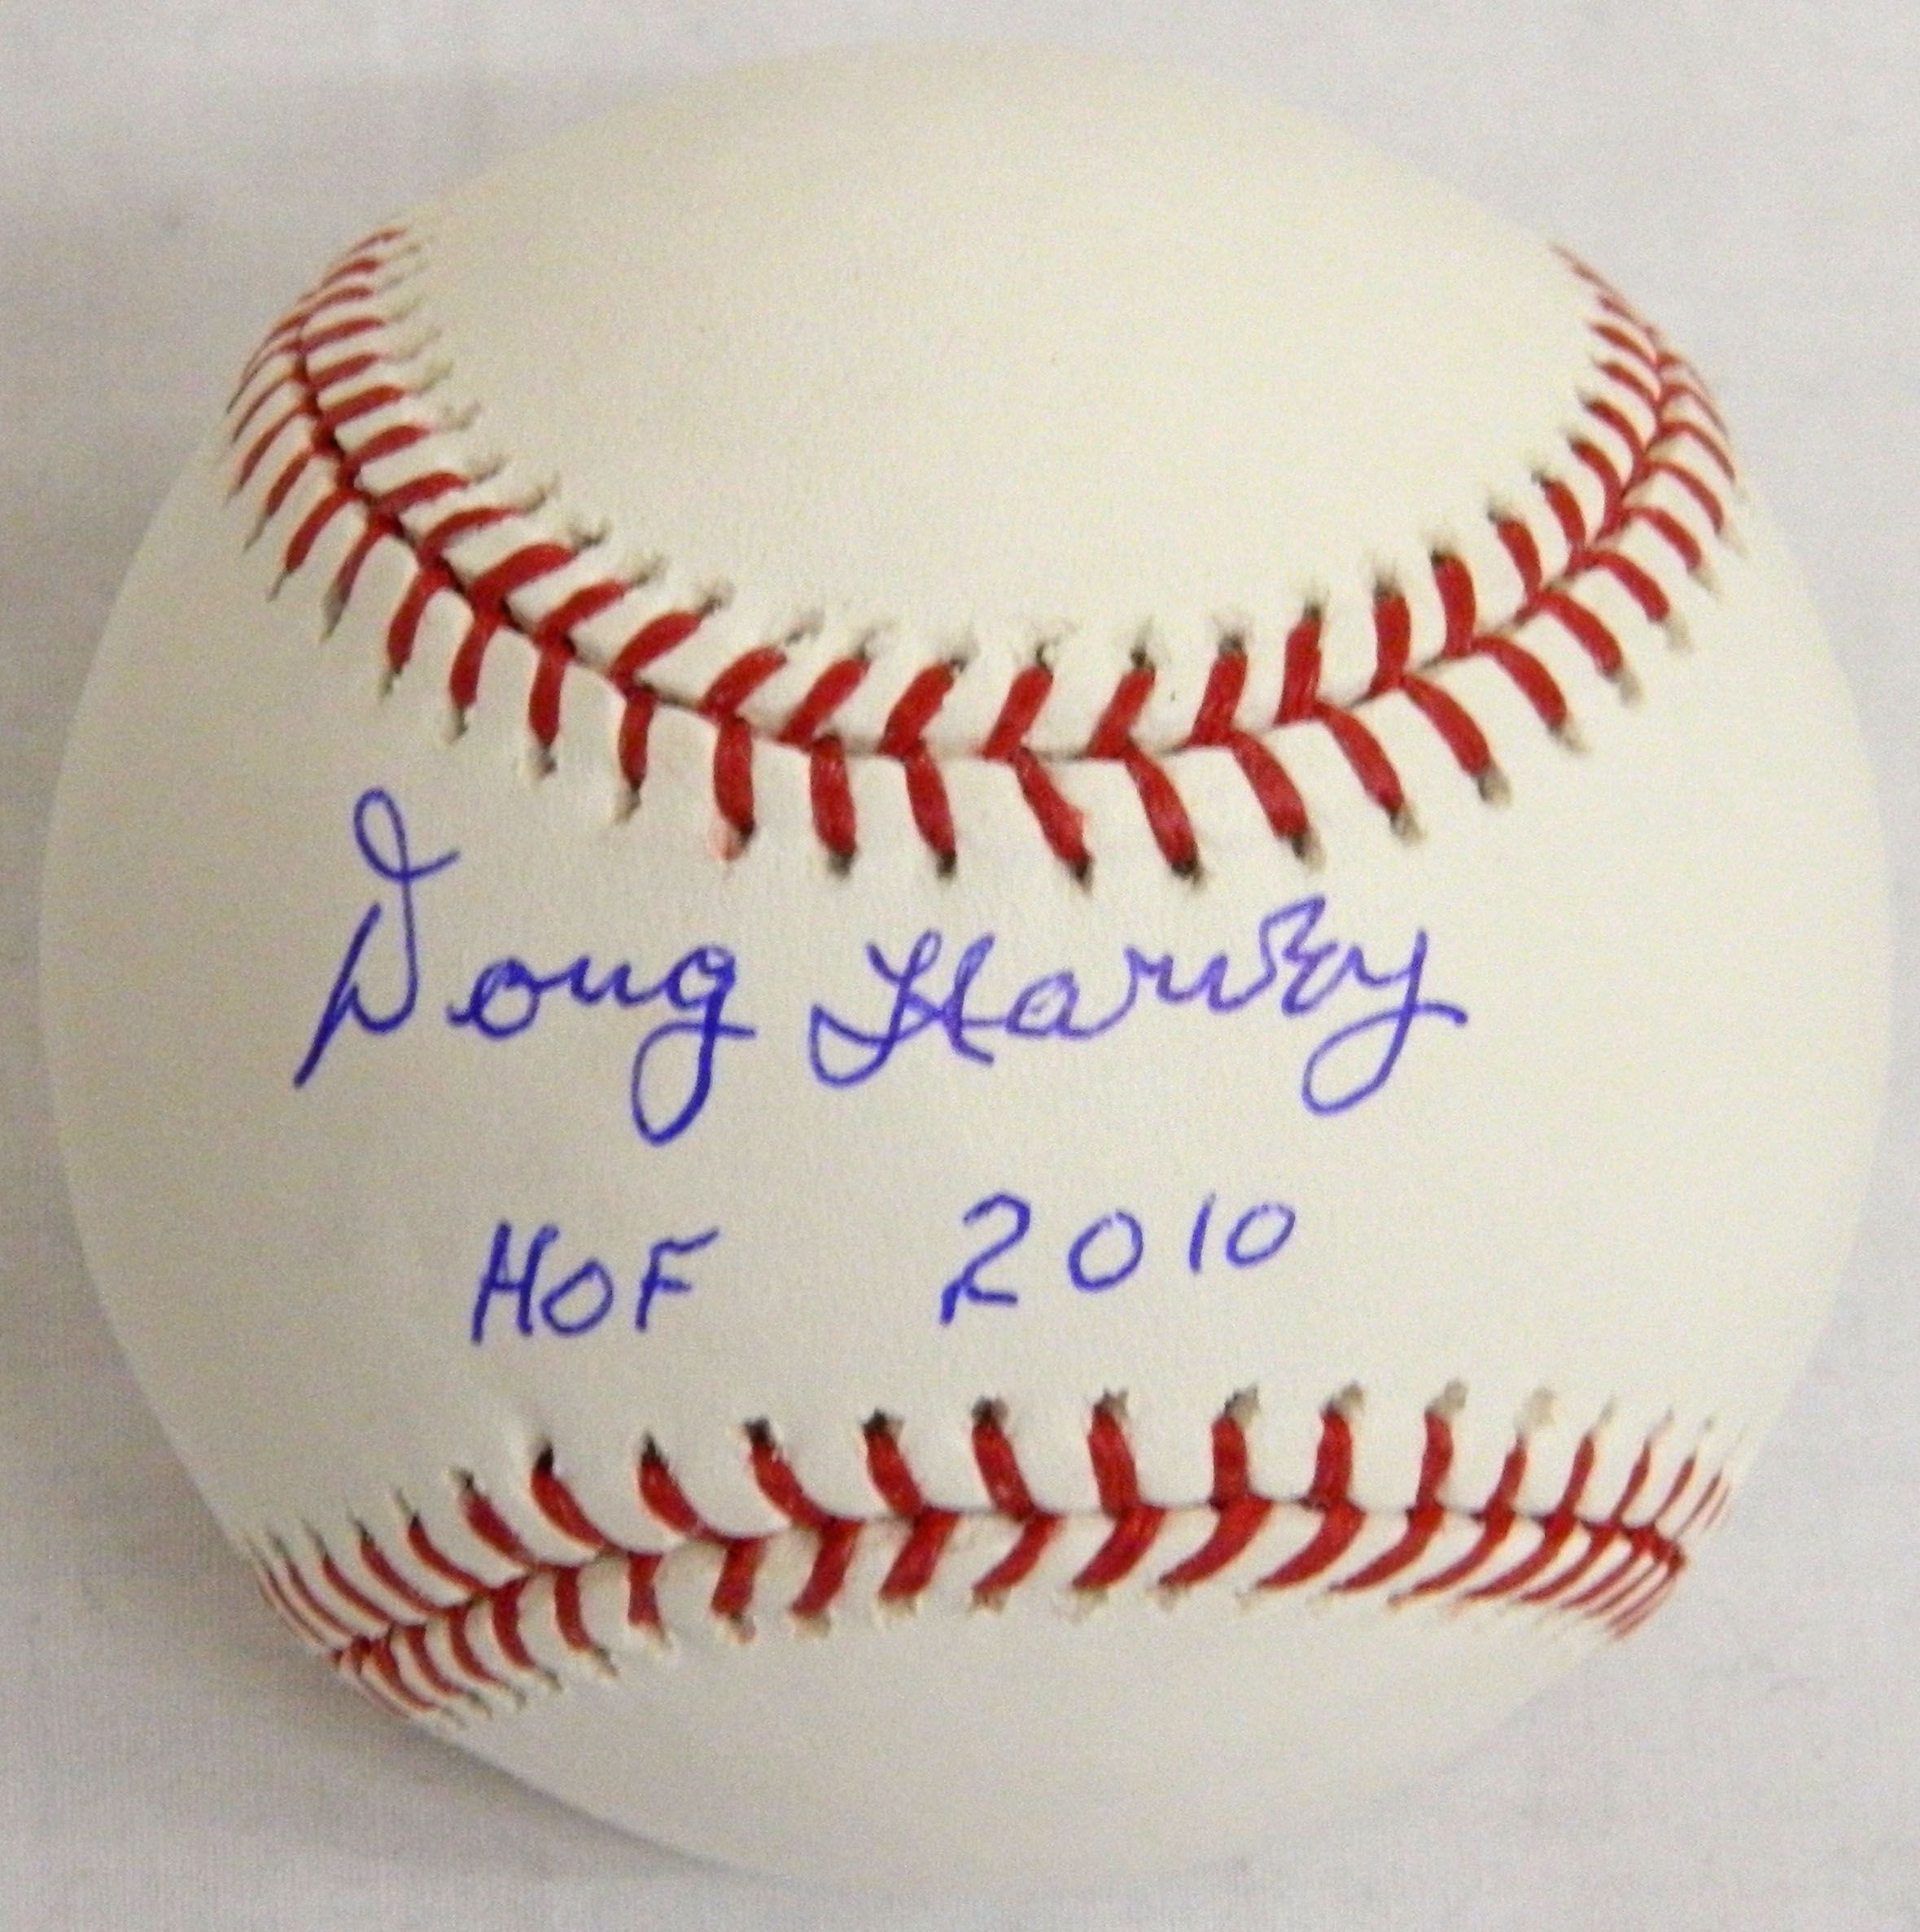 Doug Harvey Signed Official MLB Baseball with HOF 2010 inscription